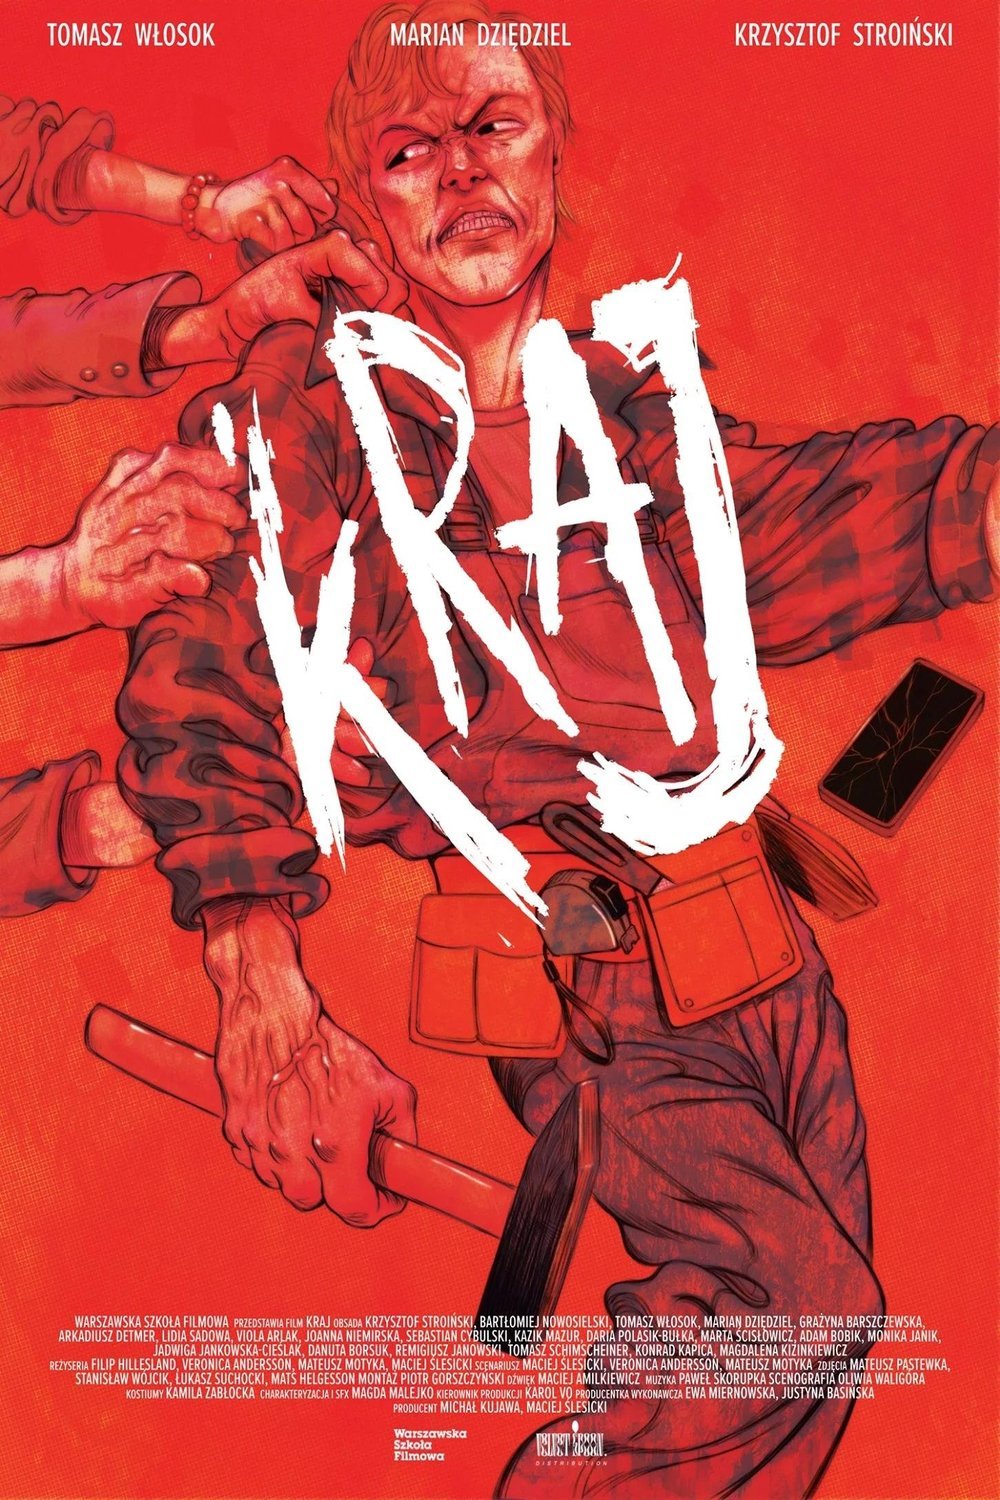 Polish poster of the movie Kraj